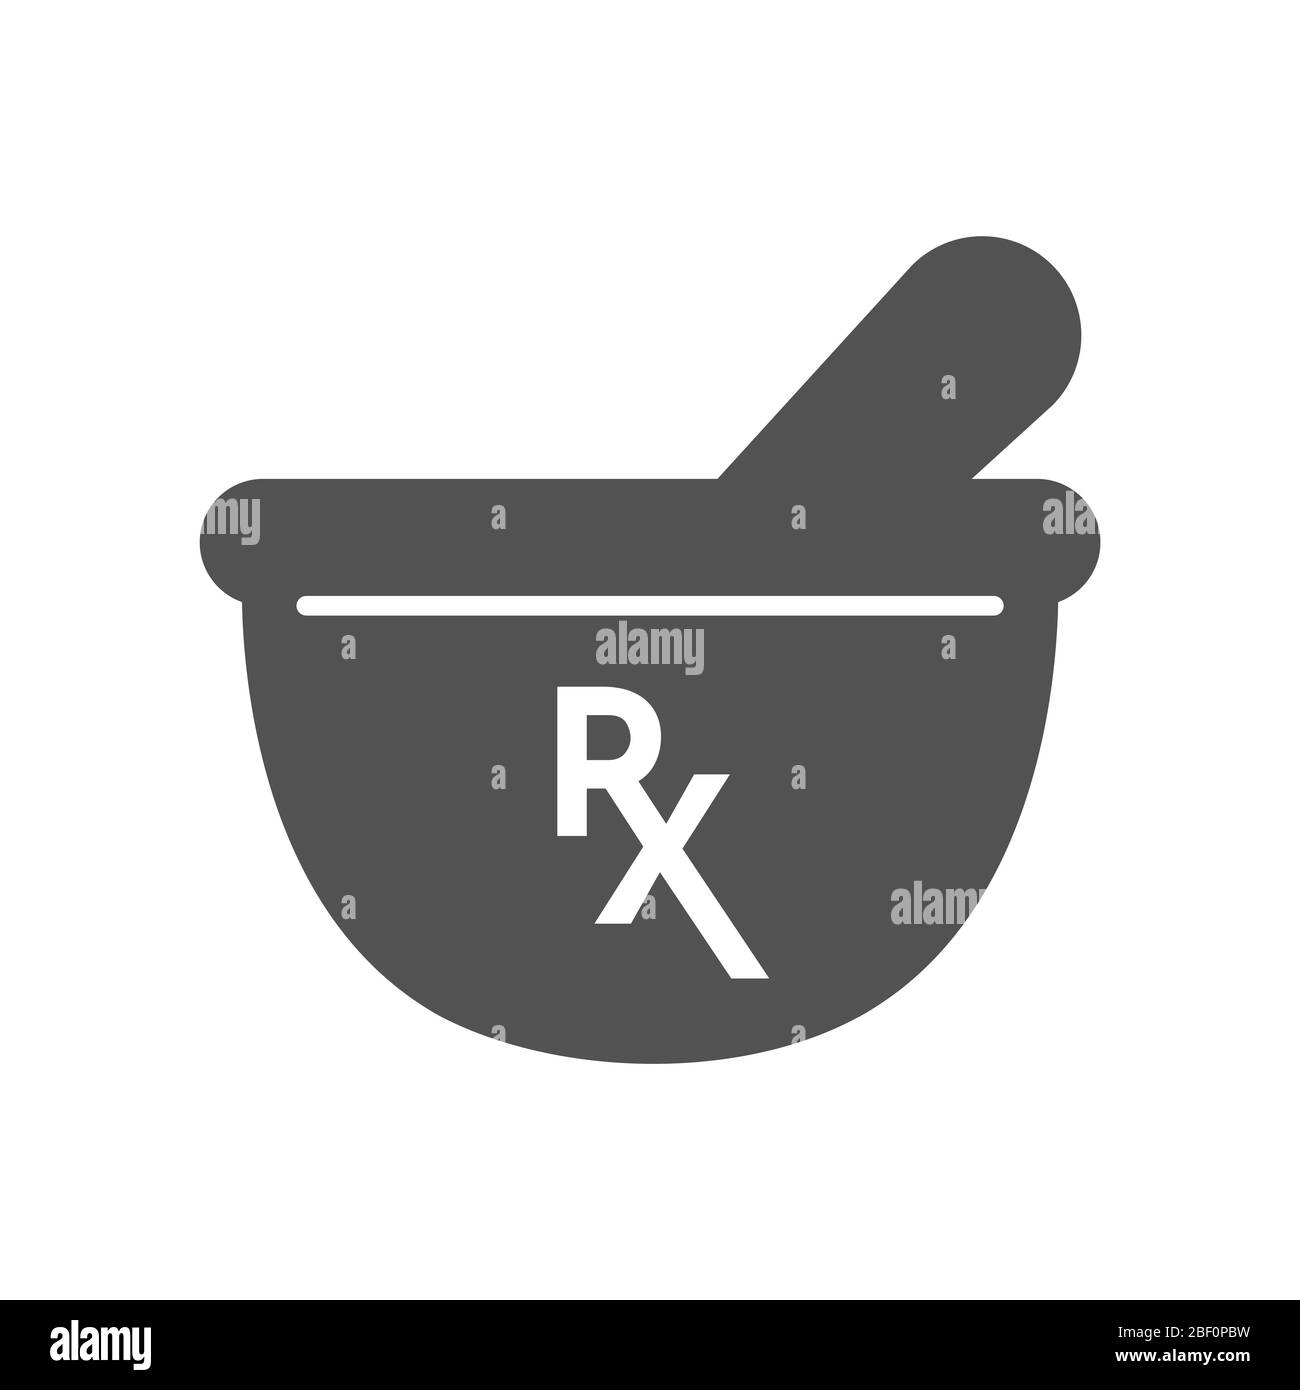 Pharmacy and Prescription Icon with pharmaceutical image depicting pharmacy icon Stock Photo